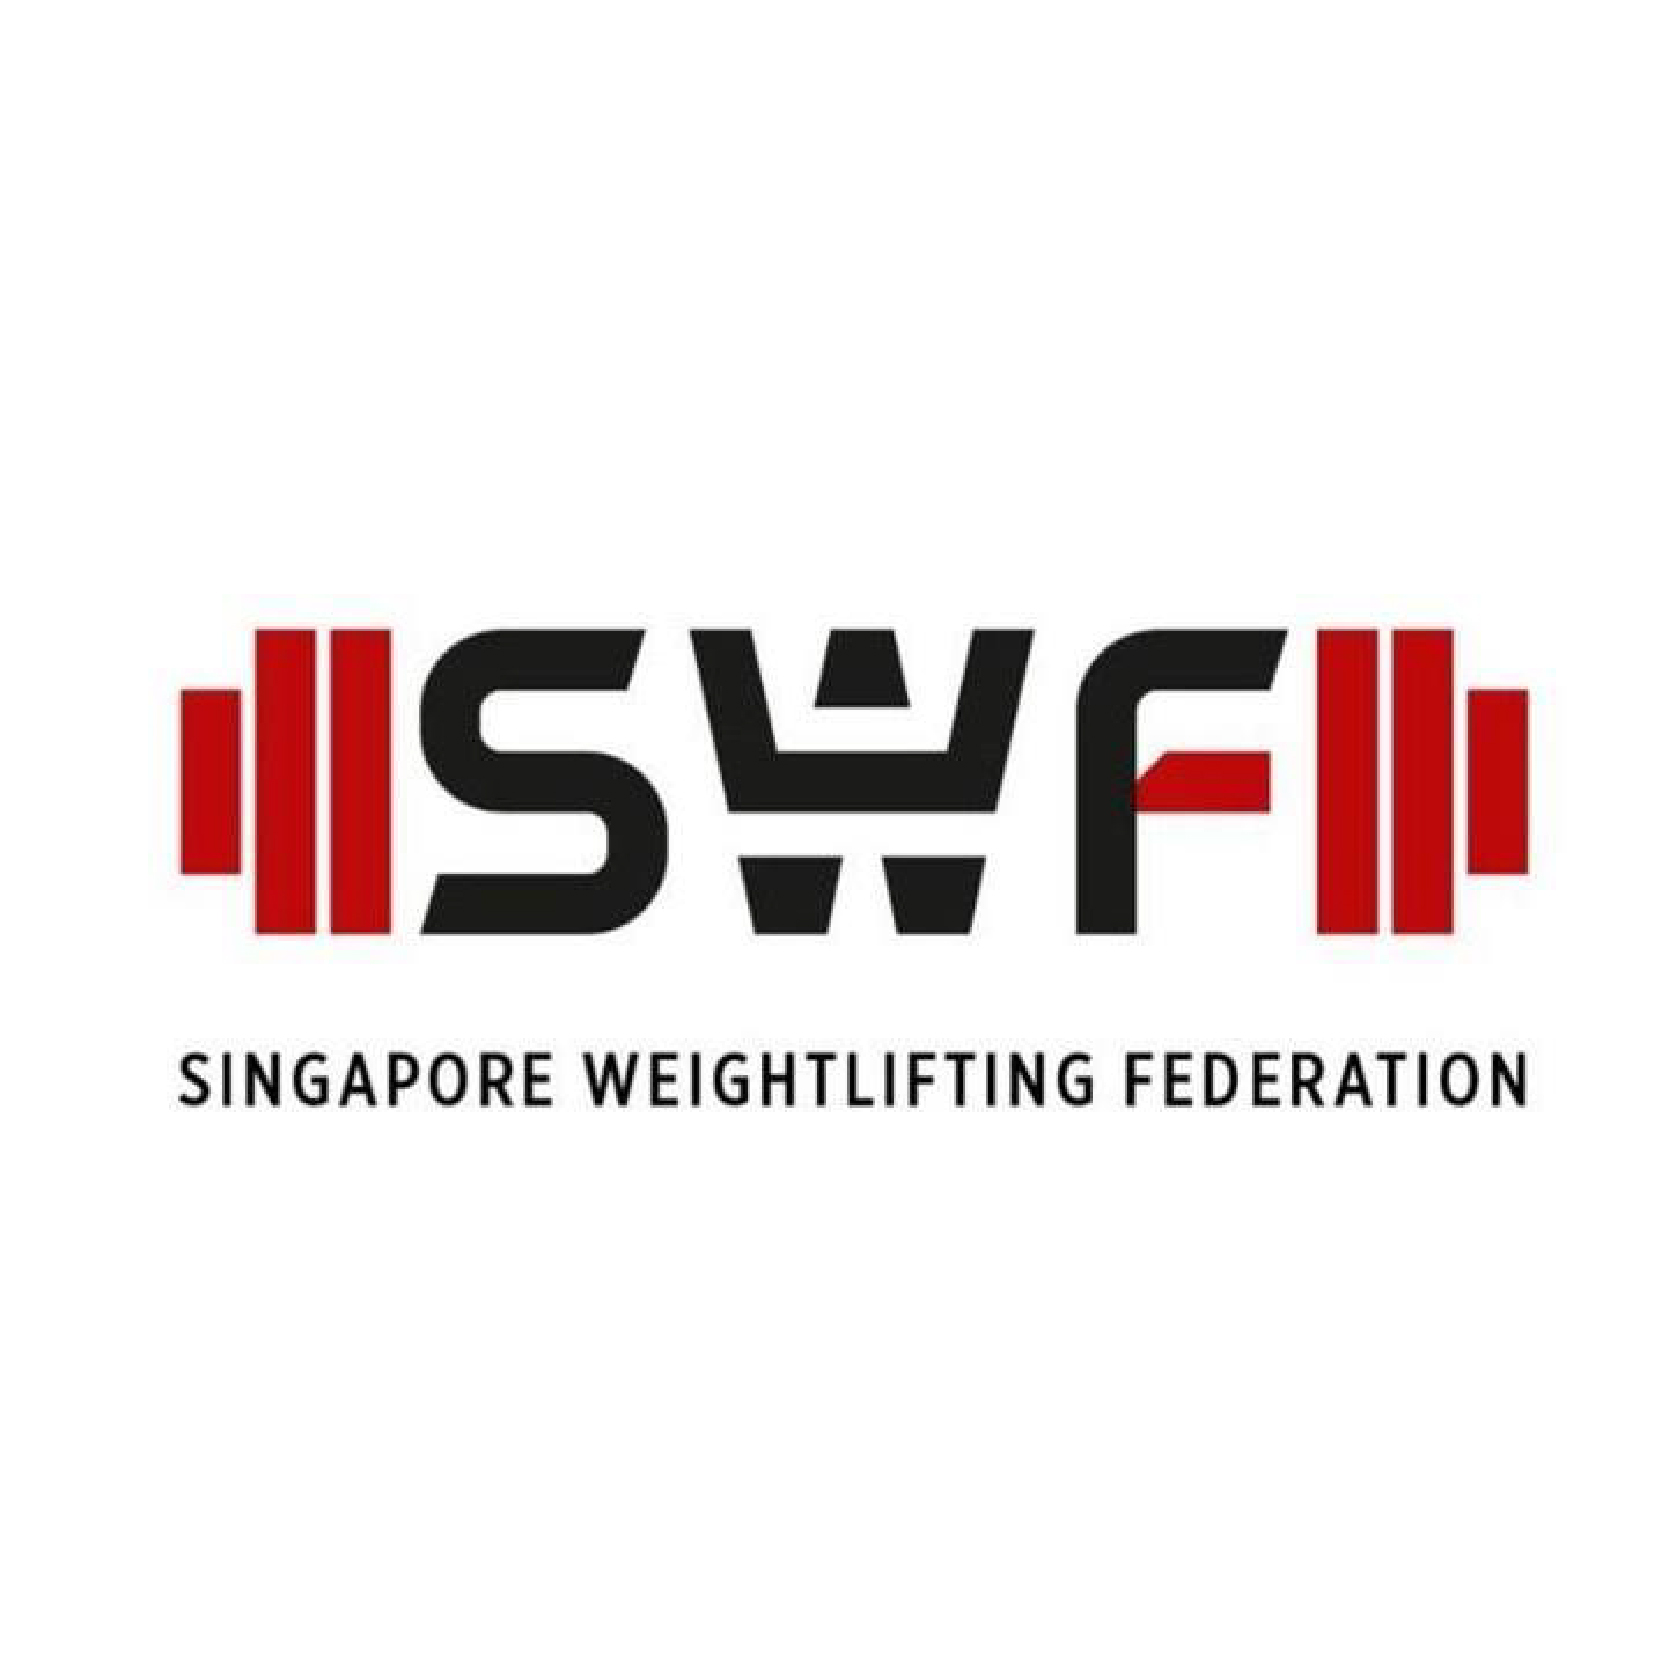 Singapore Weightlifting Federation